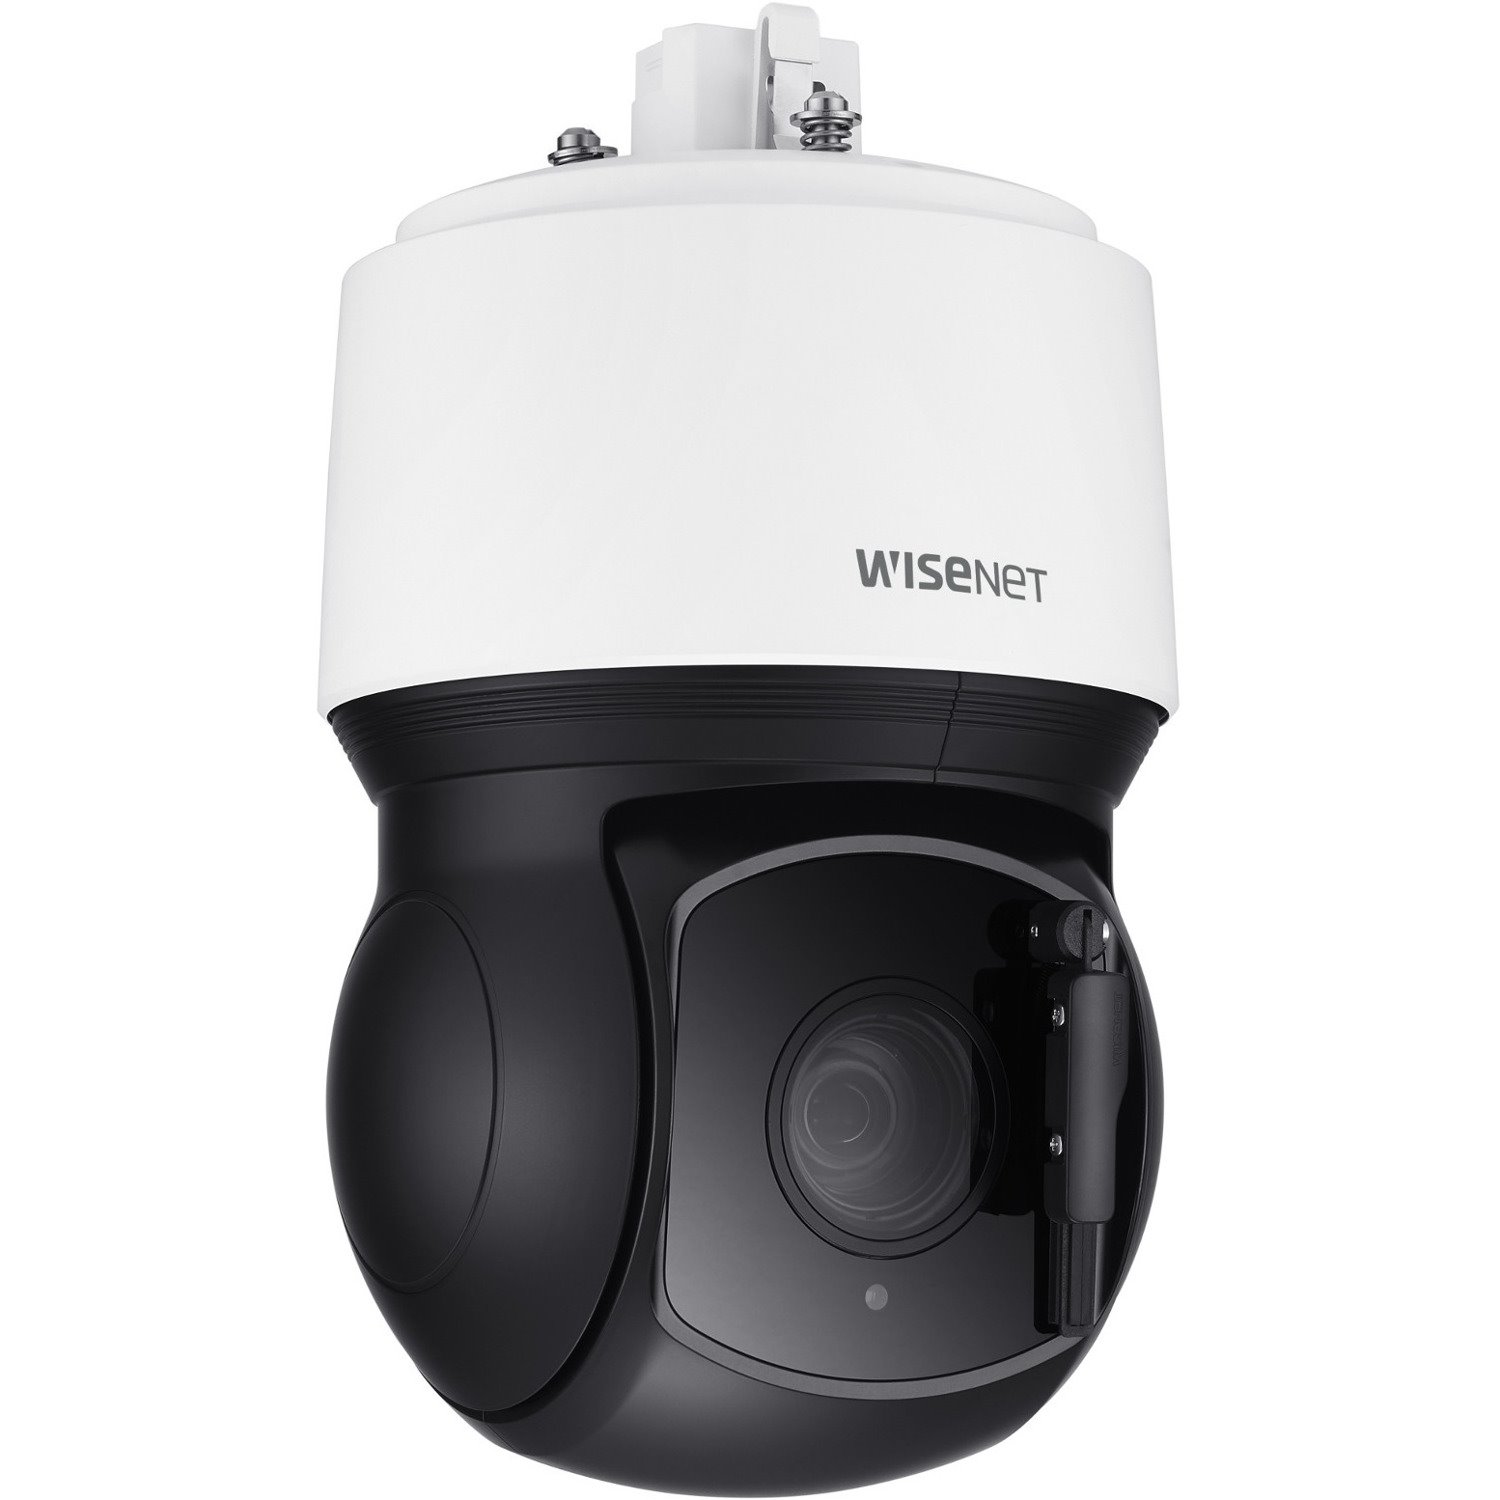 Wisenet XNP-6400RW 2 Megapixel Indoor/Outdoor Full HD Network Camera - Color, Monochrome - Dome - White, Black